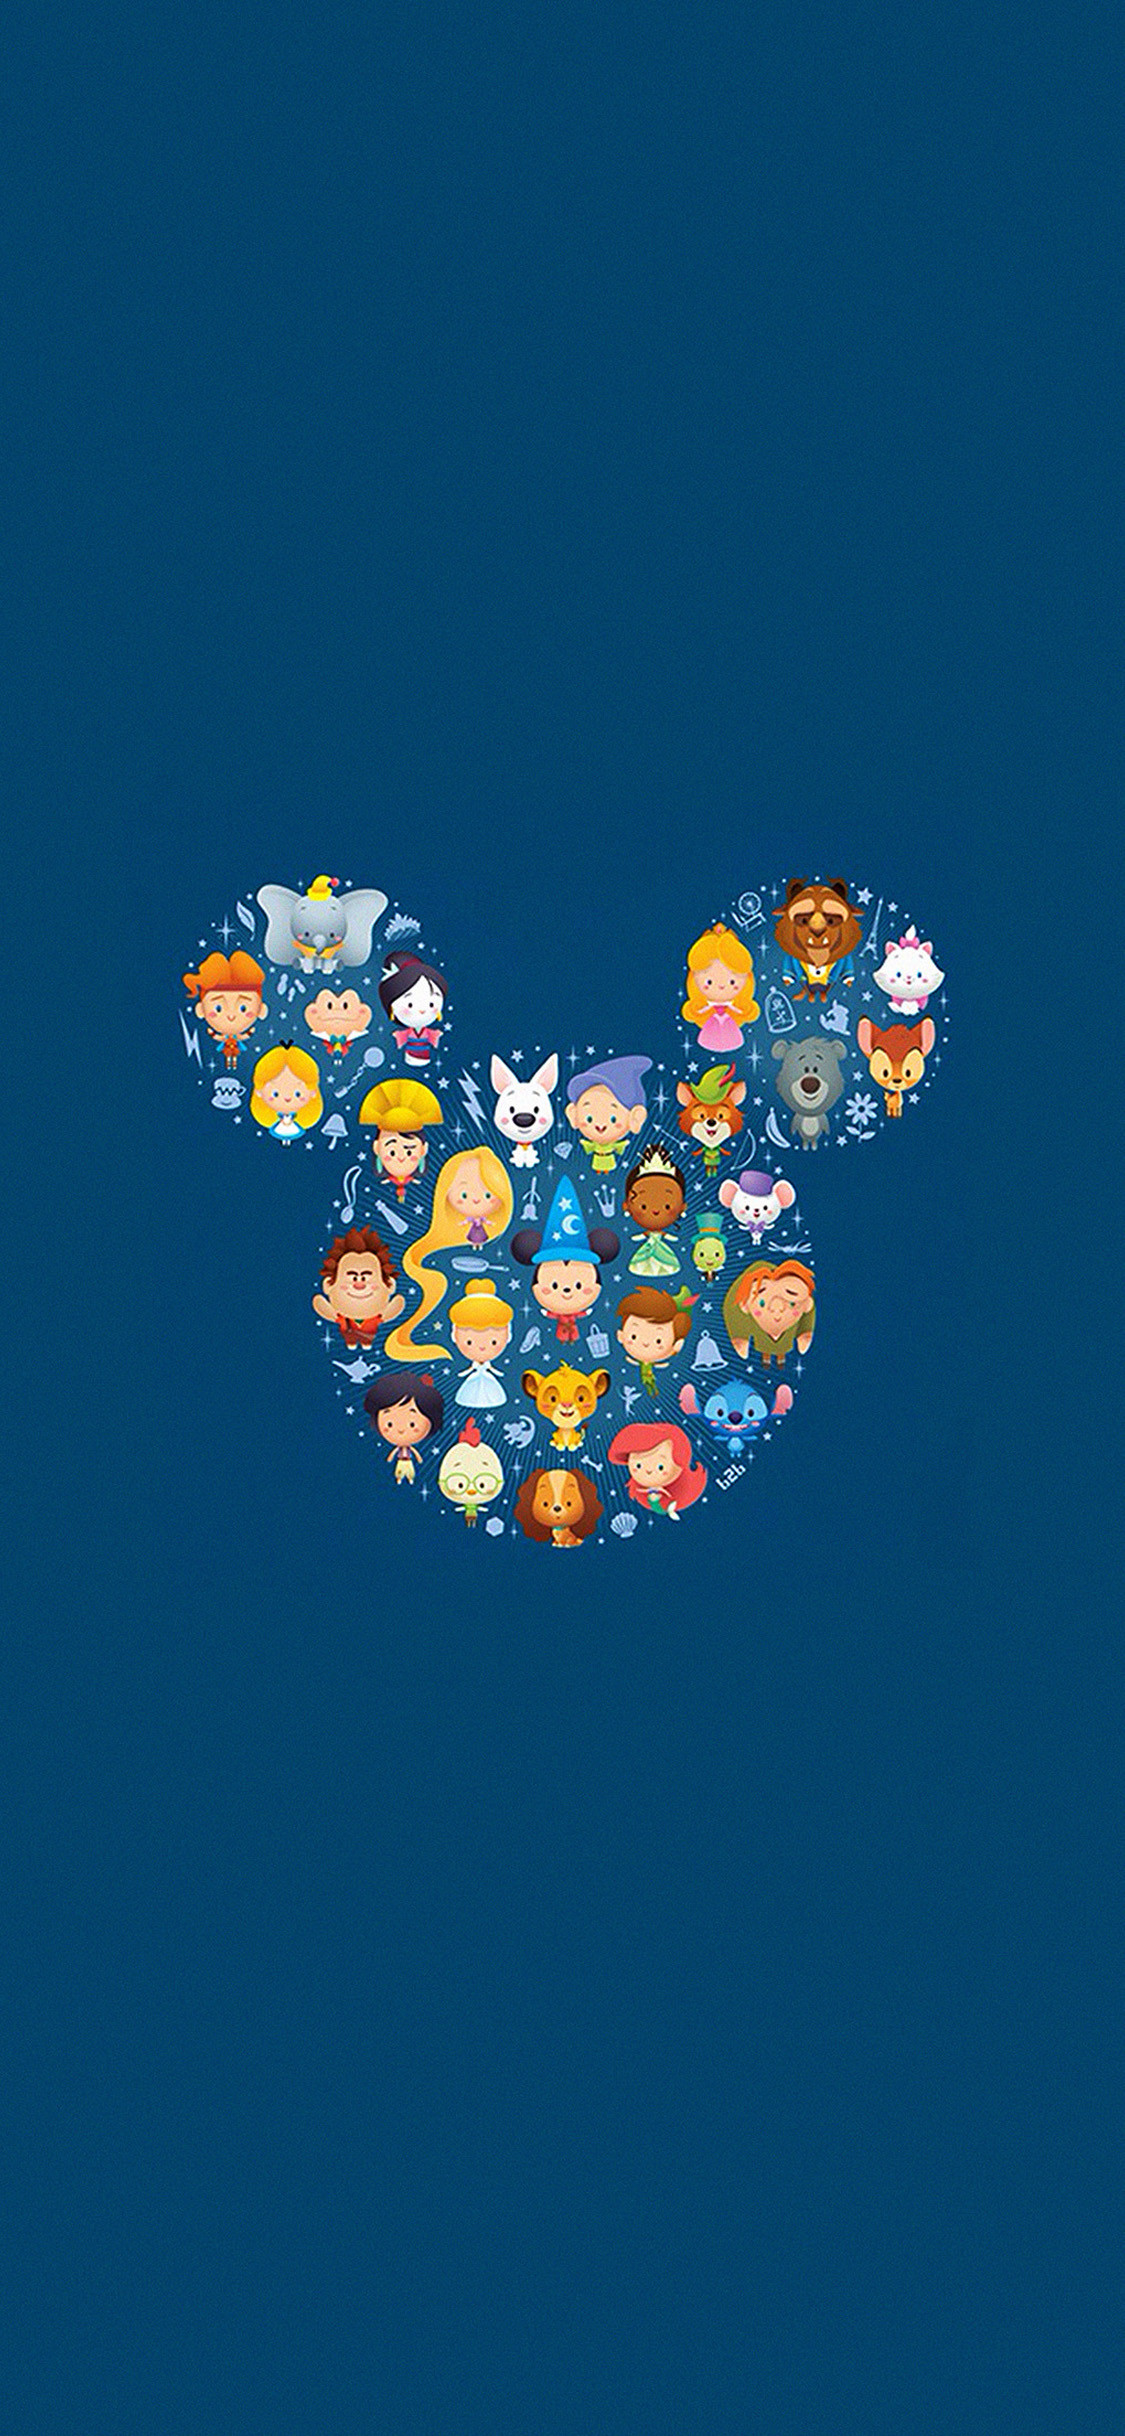 🔥 Free Download 1125x2436 Cute Disney Characters Iphone Wallpaper Cute